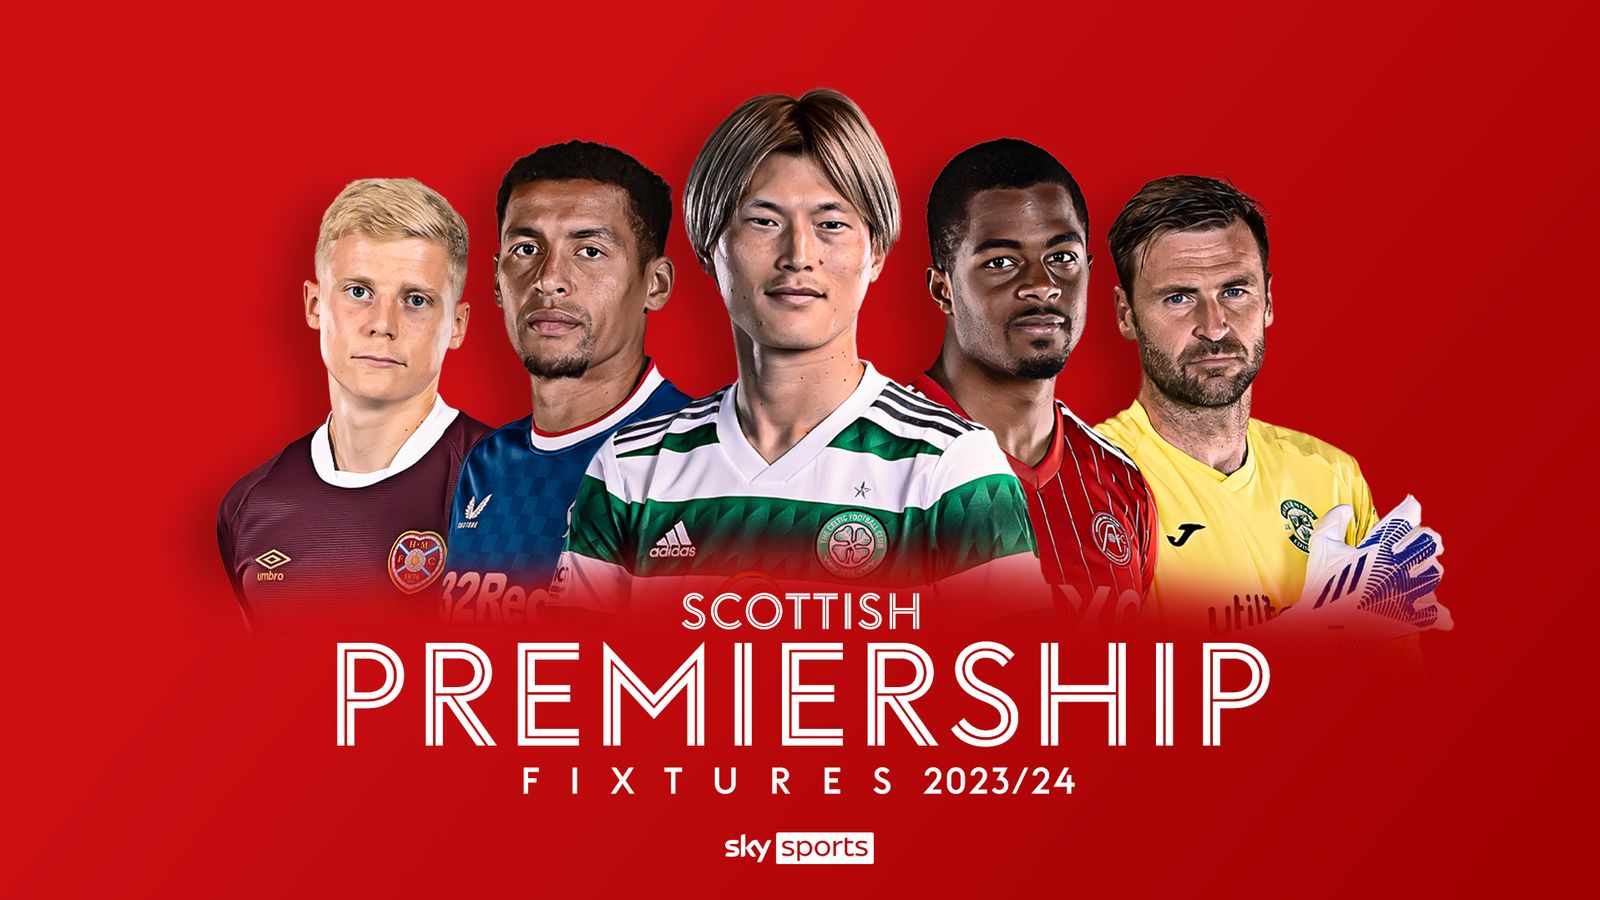 Celtic: Scottish Premiership 2023/24 fixtures and schedule